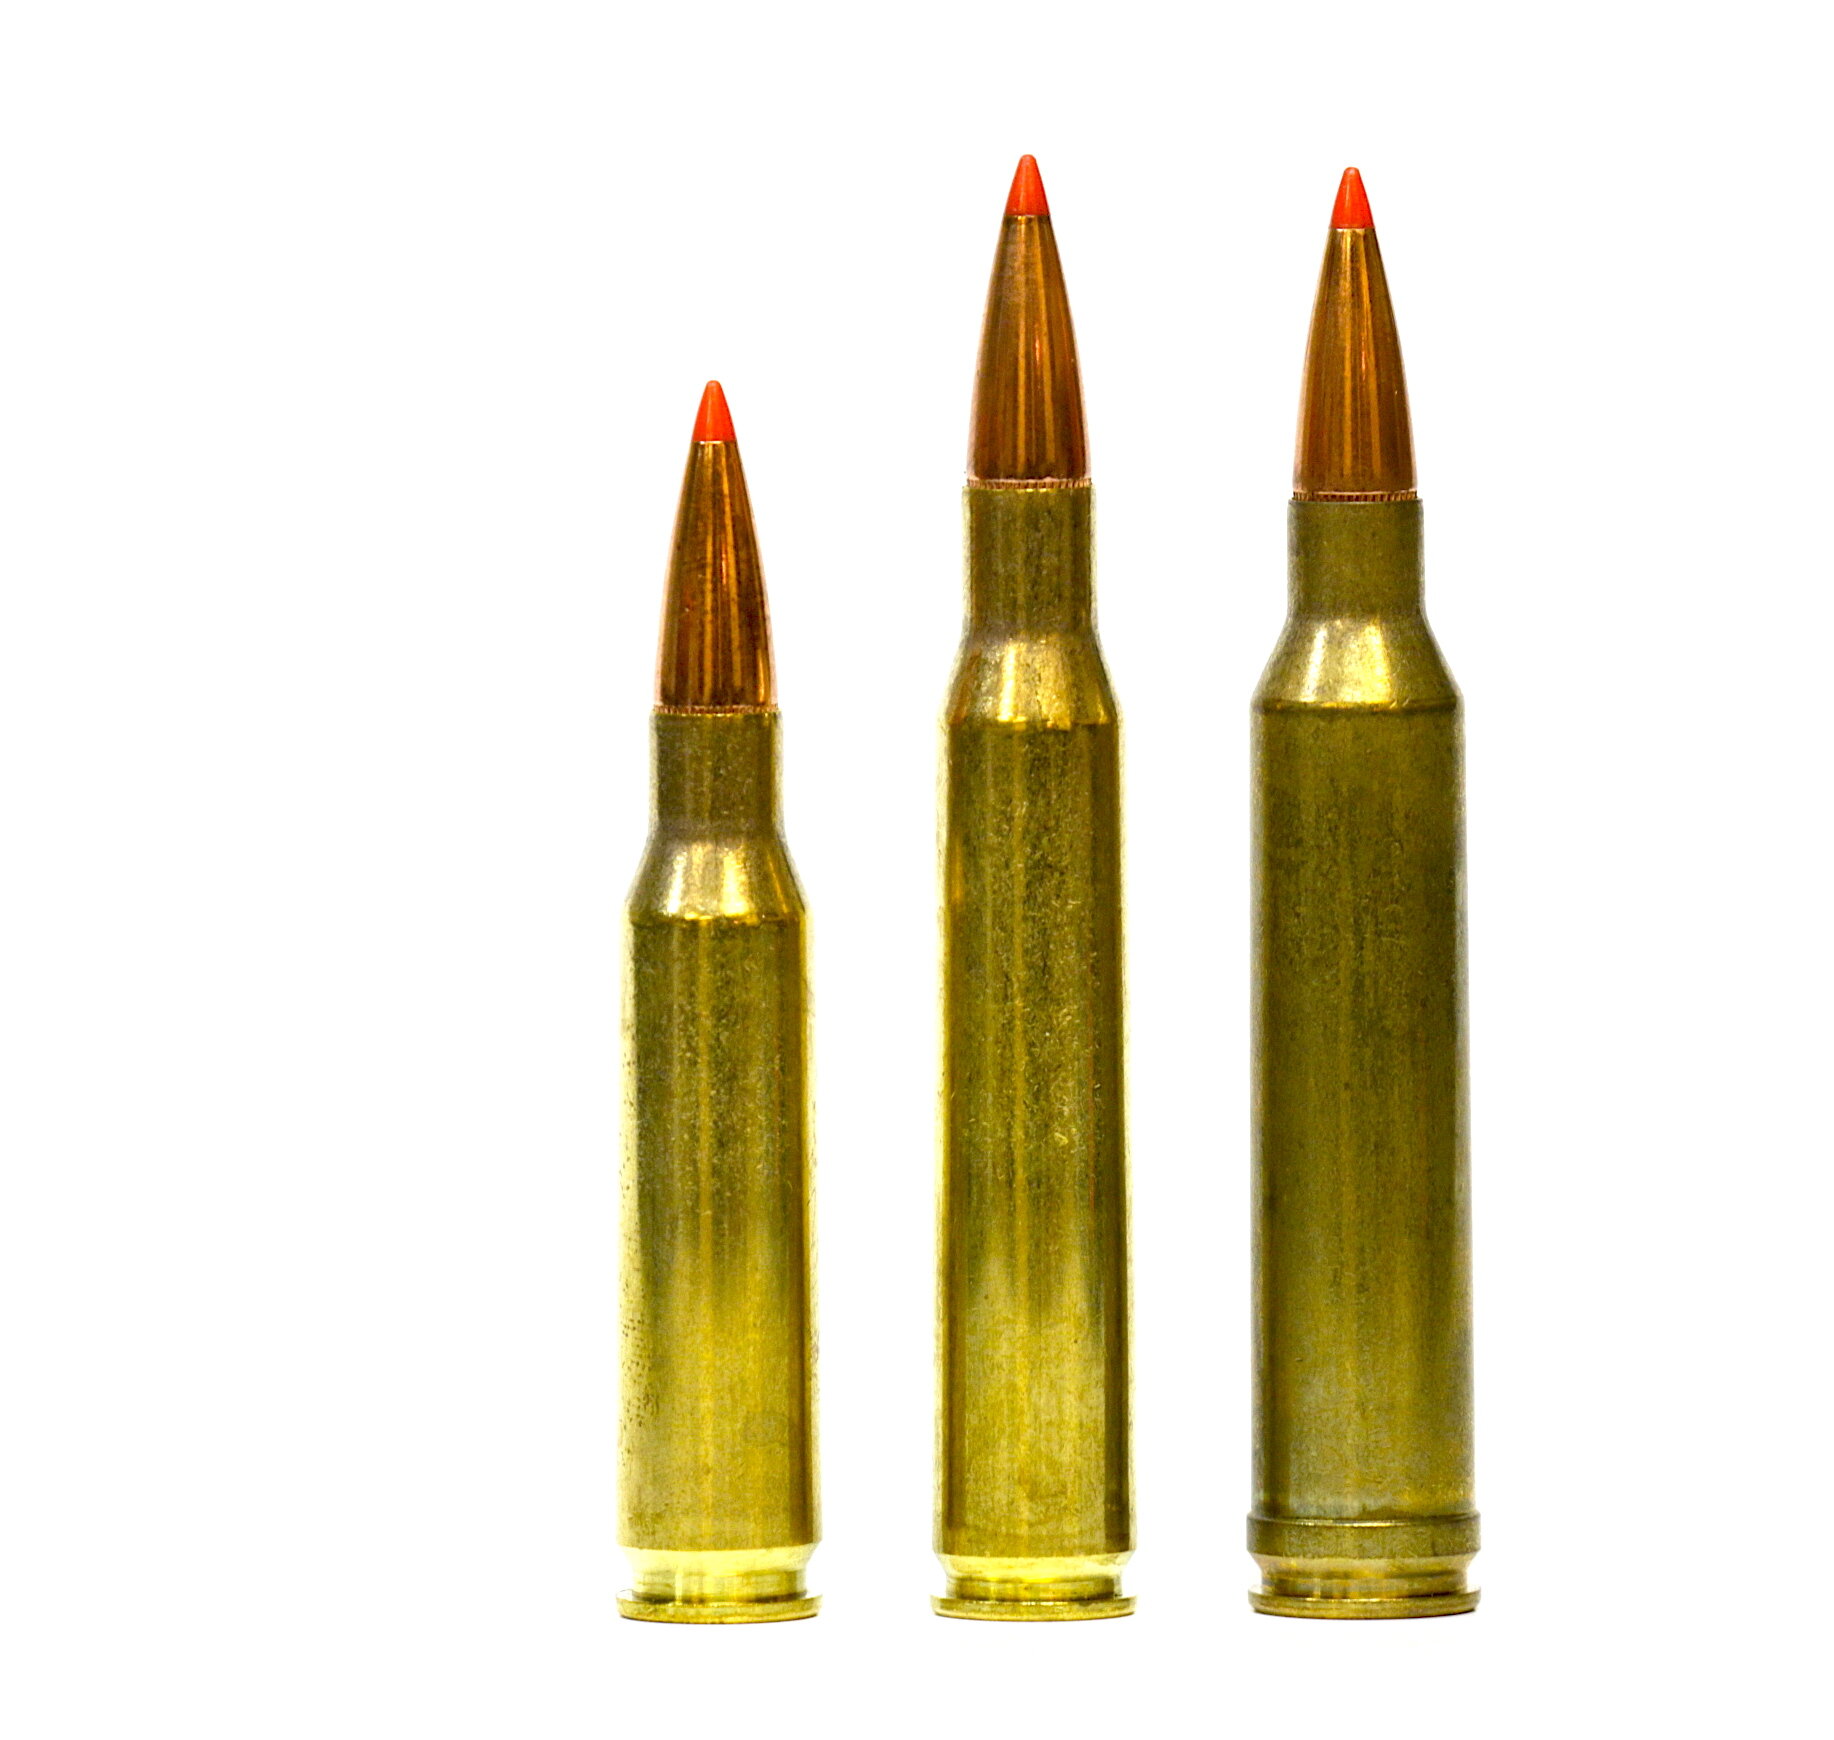 7mm-08, 280 Remington, and 7mm Rem. 